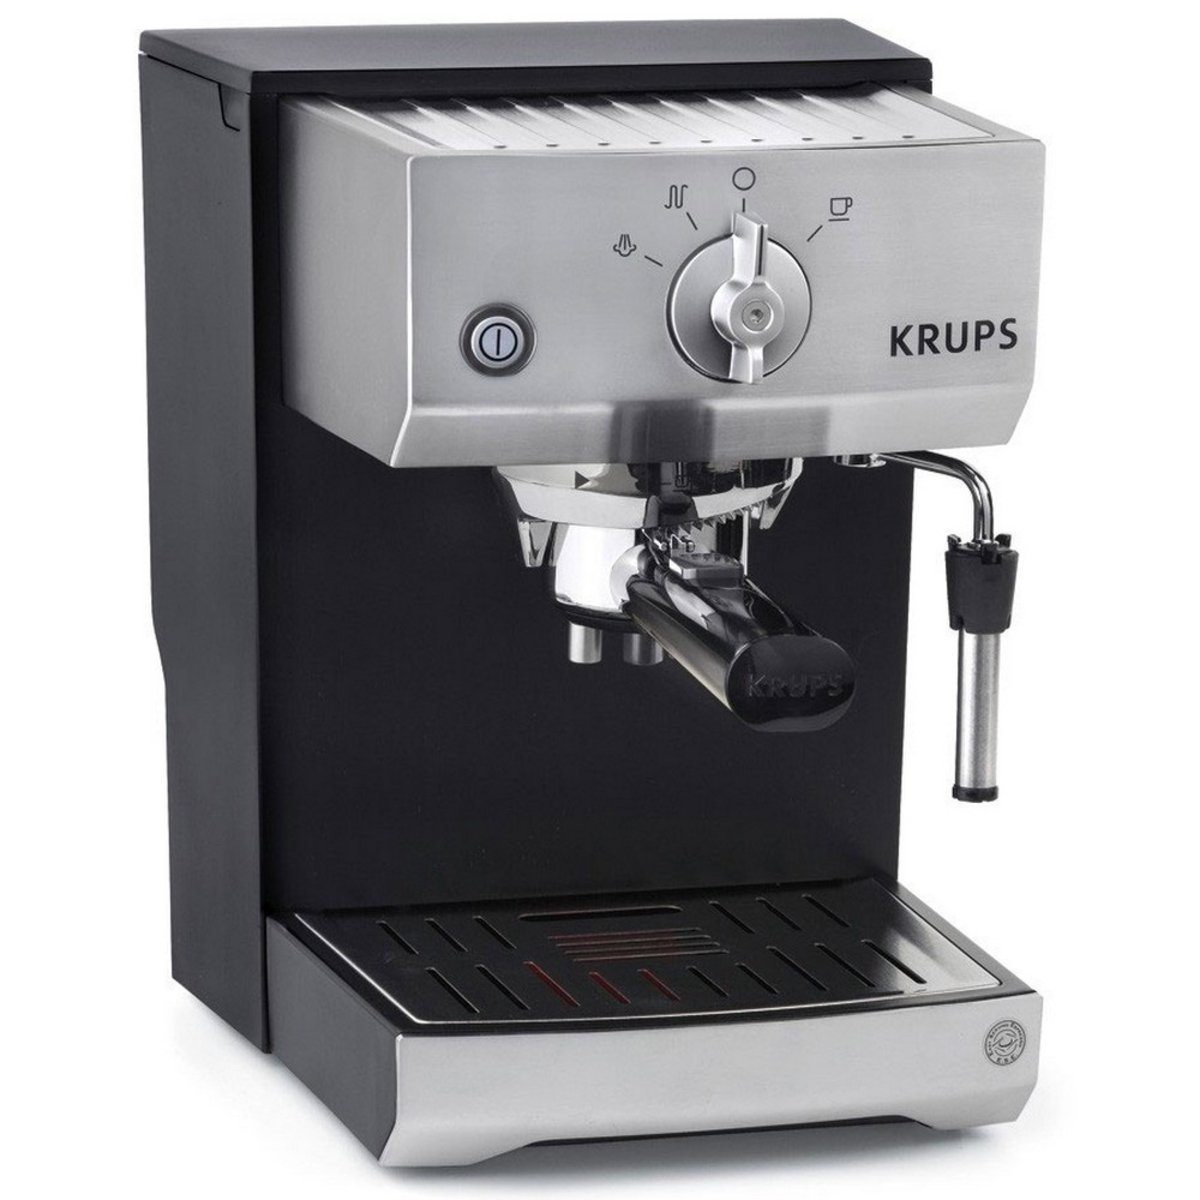 Krups Coffee Maker XP524040